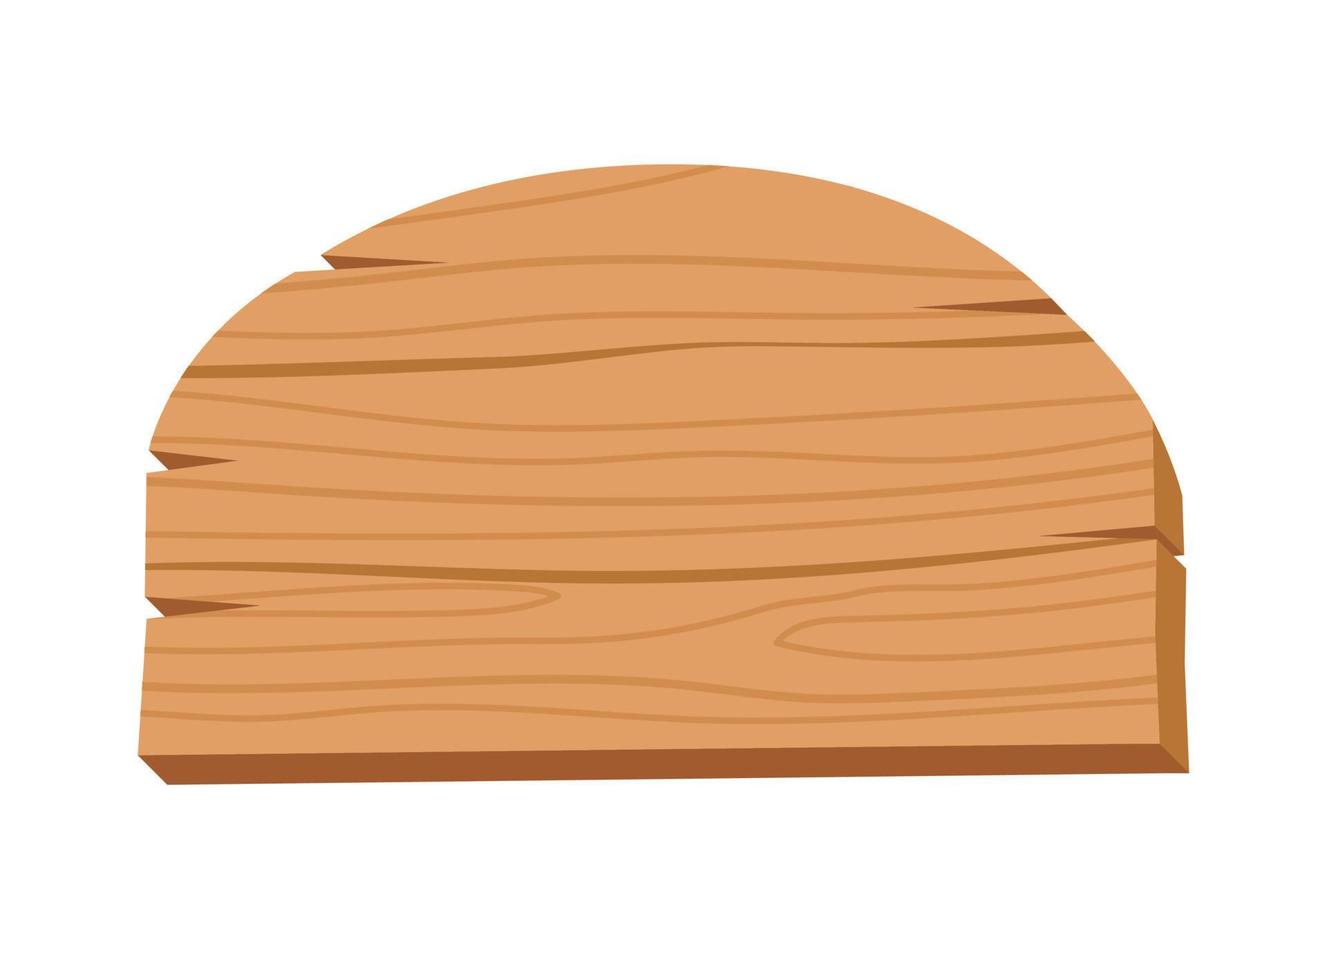 wooden badge banner, wooden plank plate vector